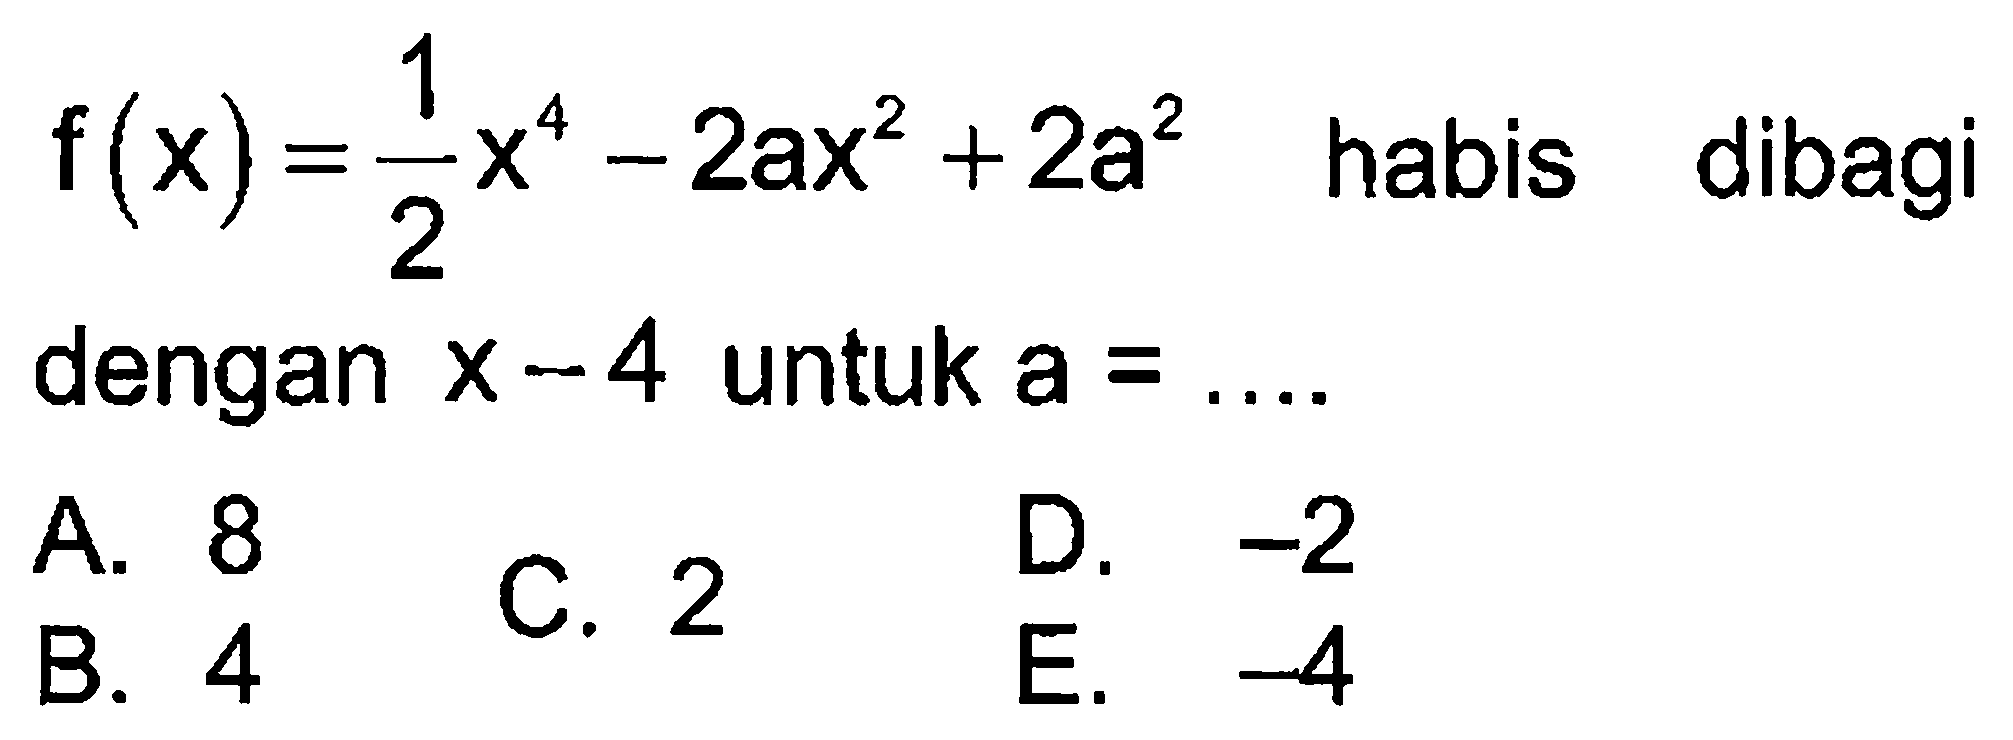 f(x)=1/2x^4-2ax^2+2a^2 habis dibagi dengan x-4 untuk a= ...